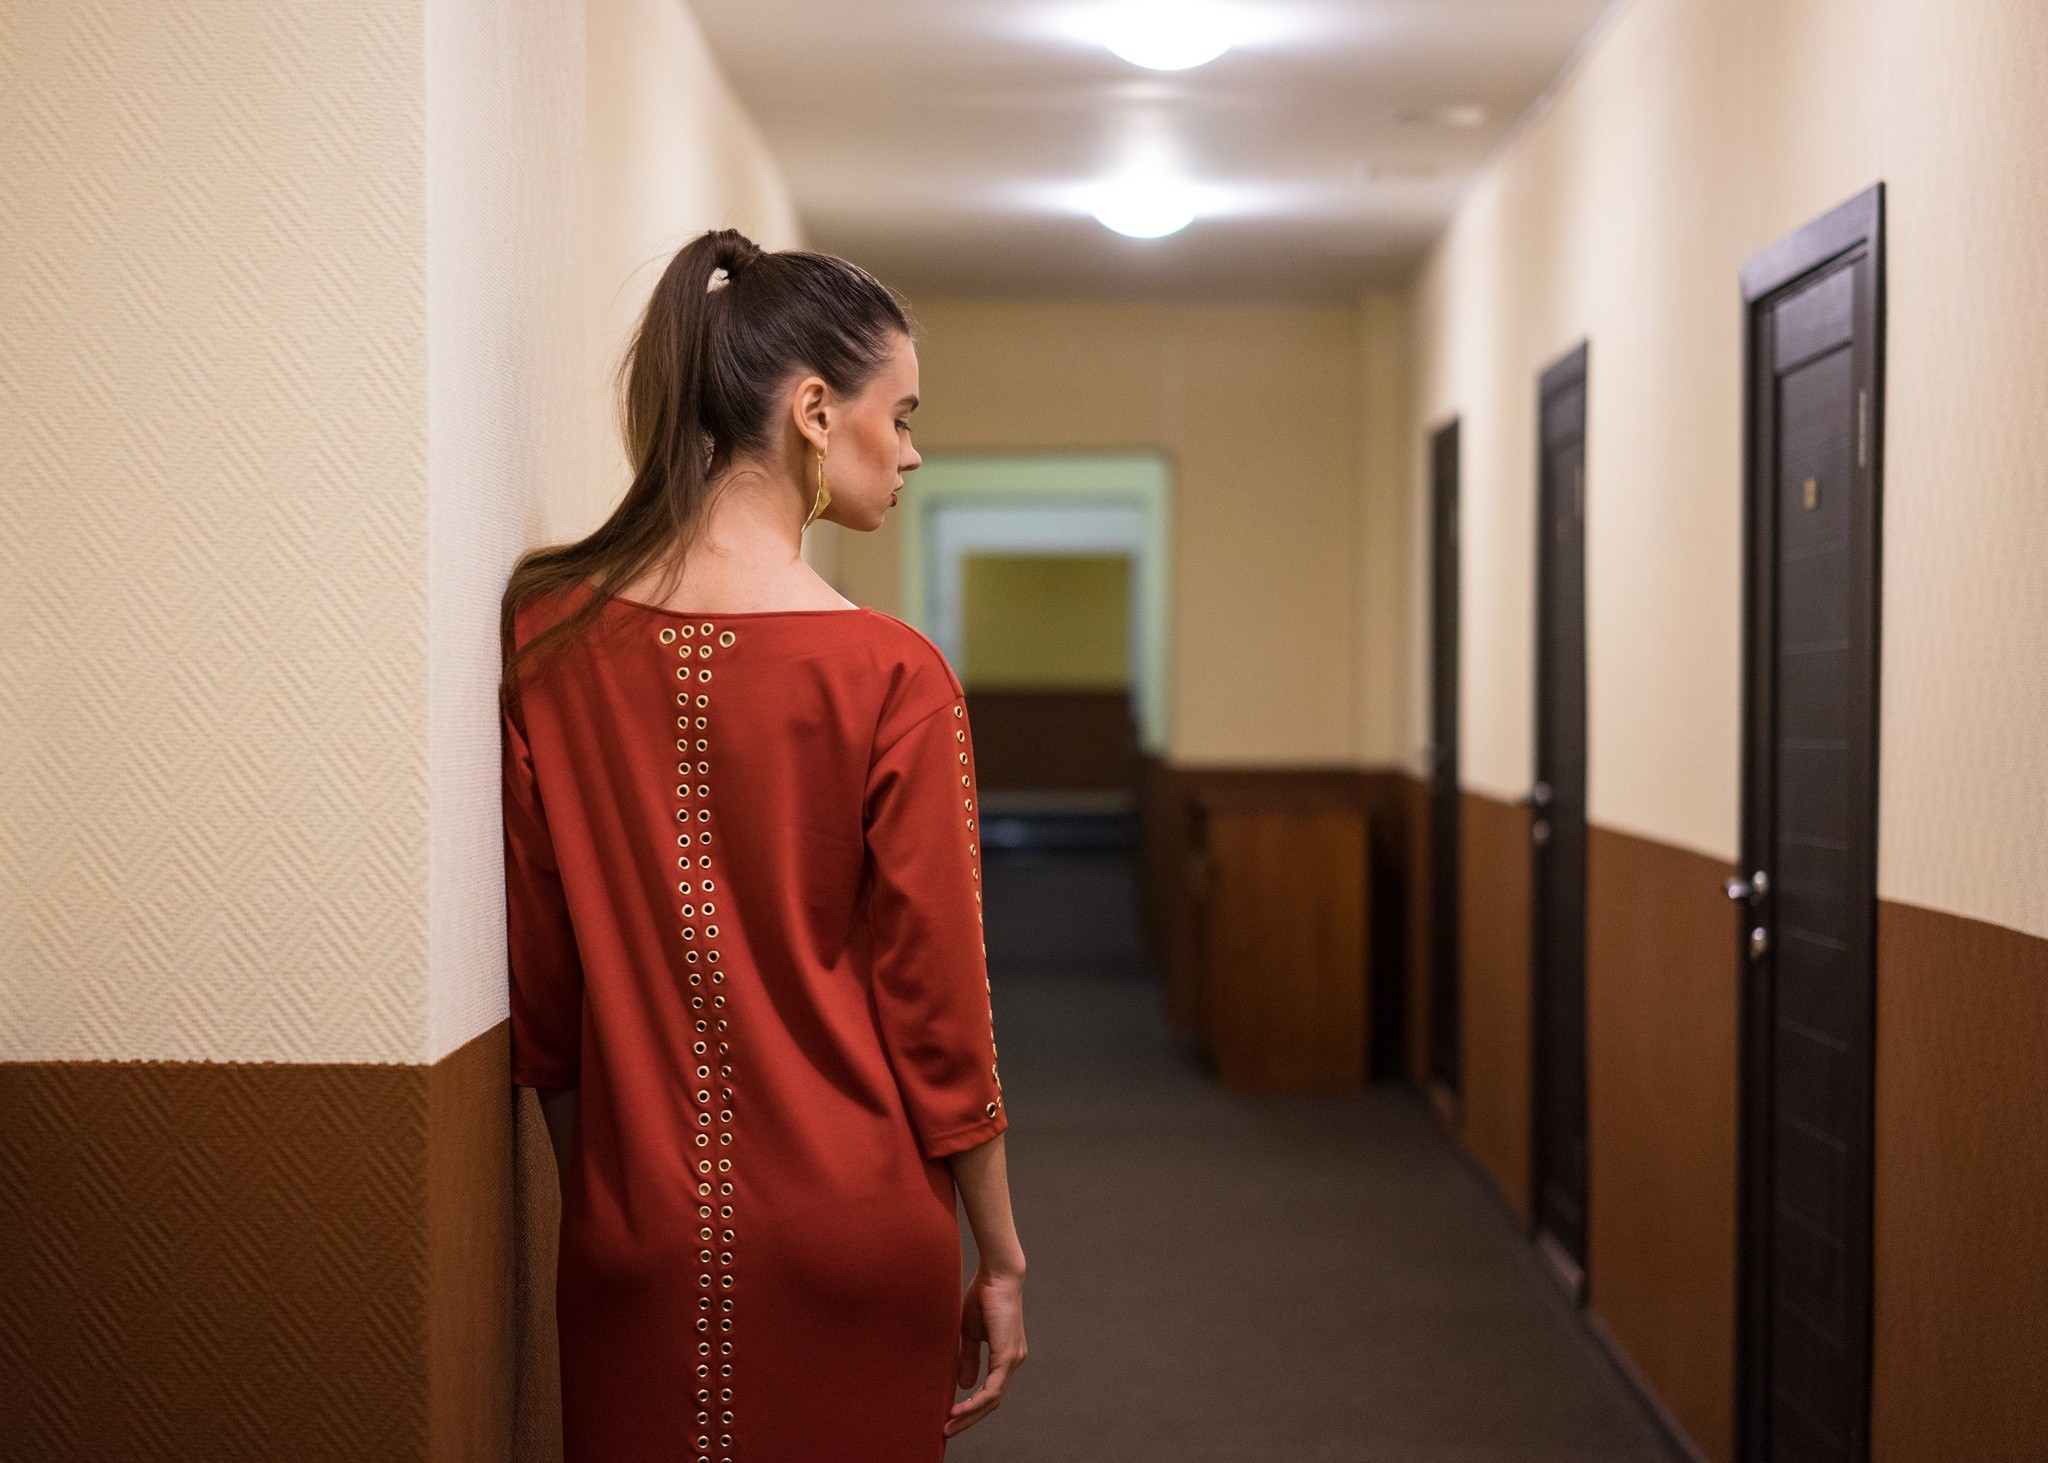 People 2048x1463 hallway women model standing red dress ponytail